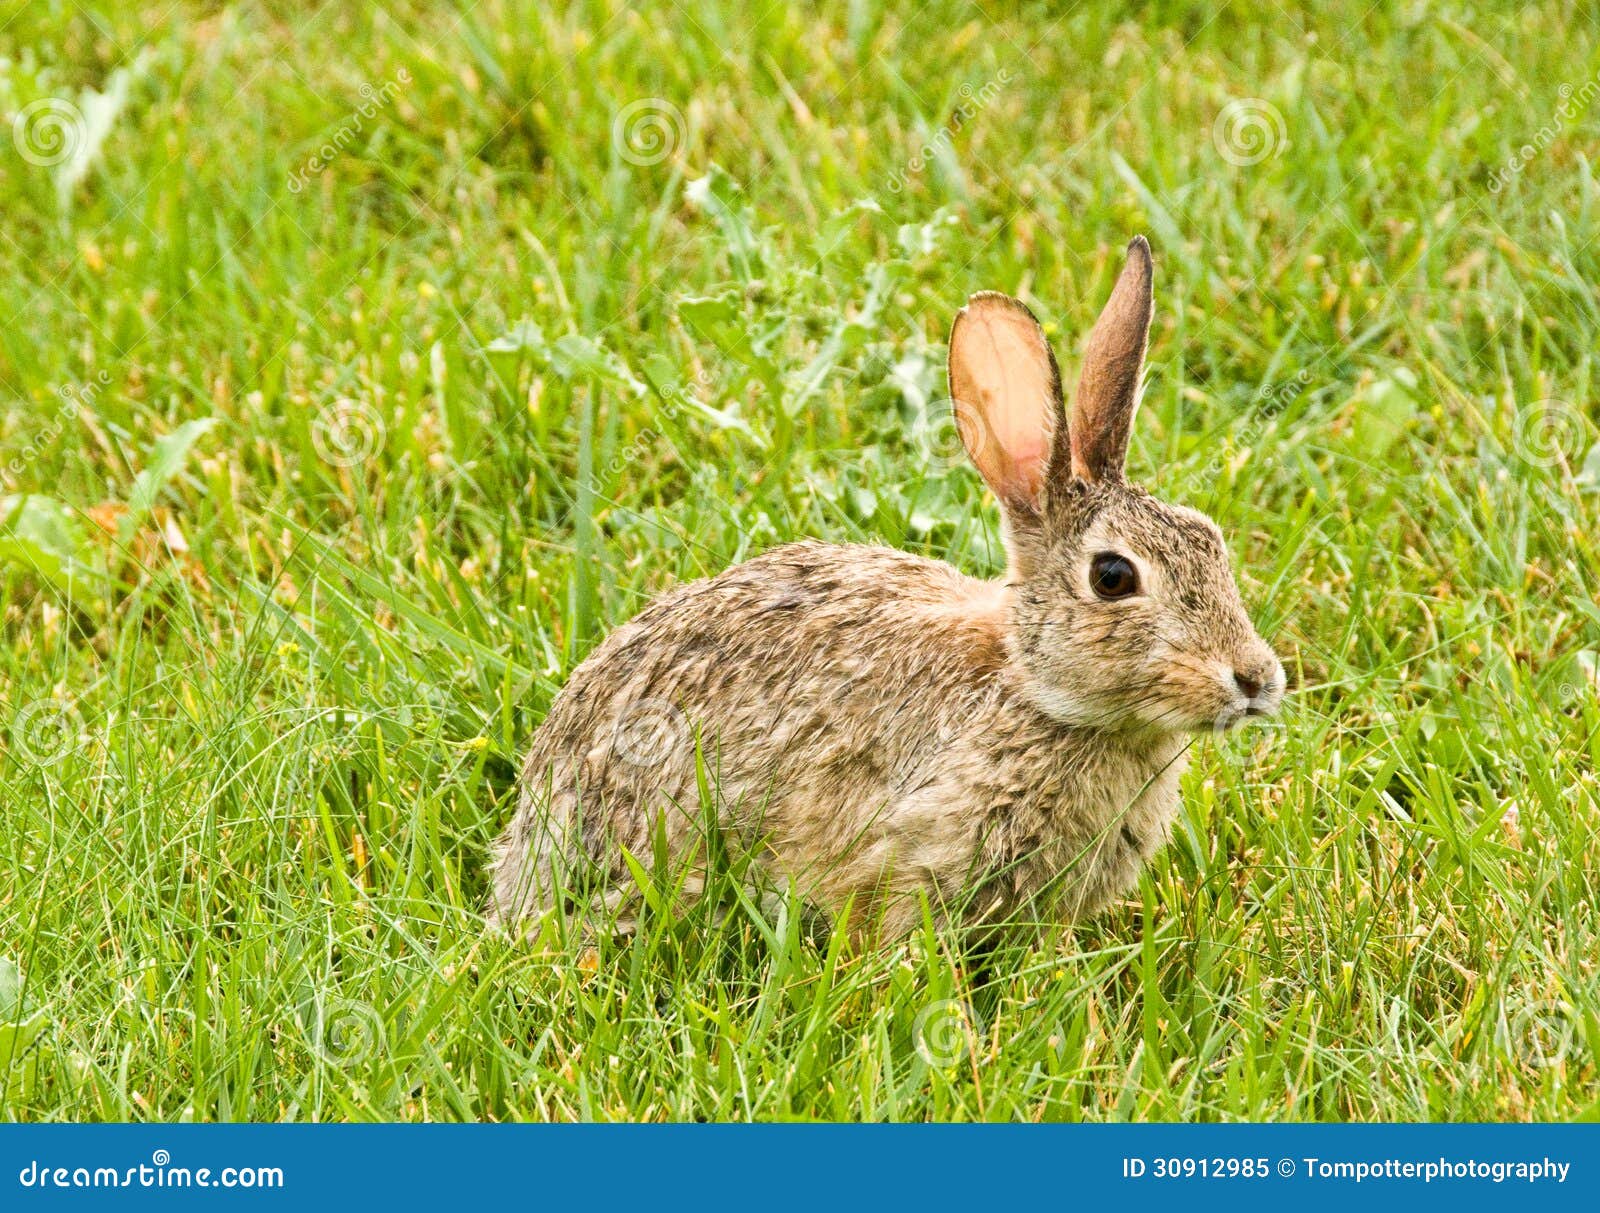 超过 60 张关于“Young Hare”和“野兔”的免费图片 - Pixabay